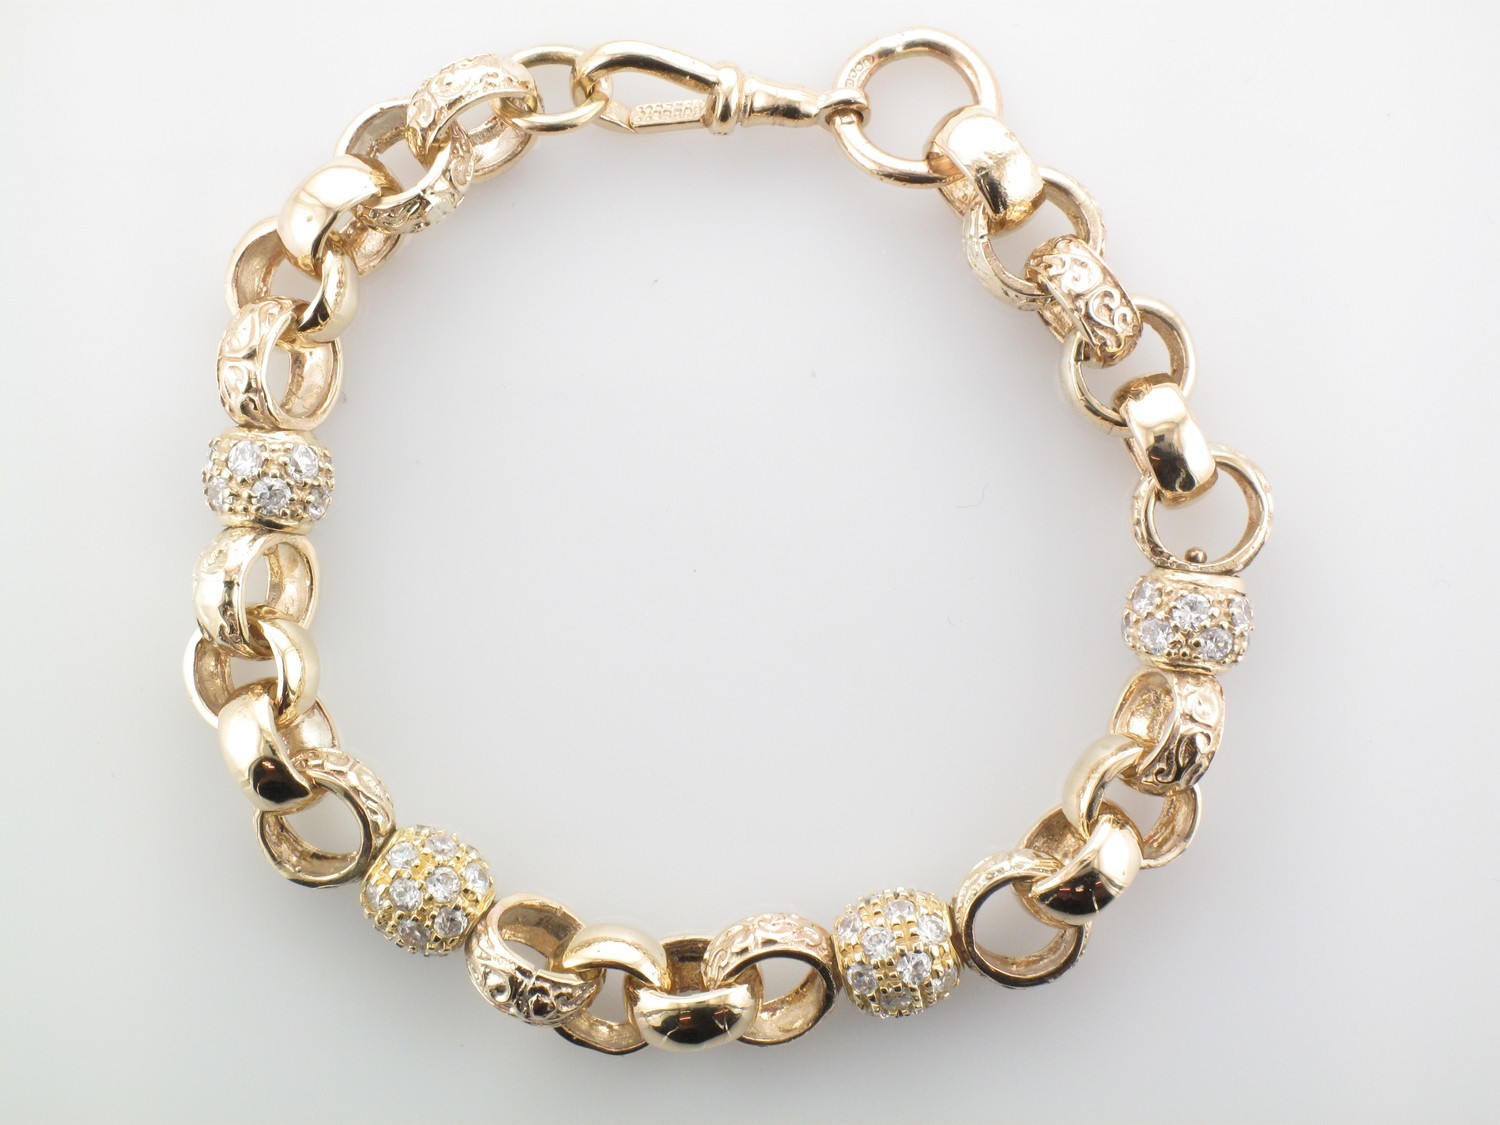 9 carat cz bead and belcher bracelet